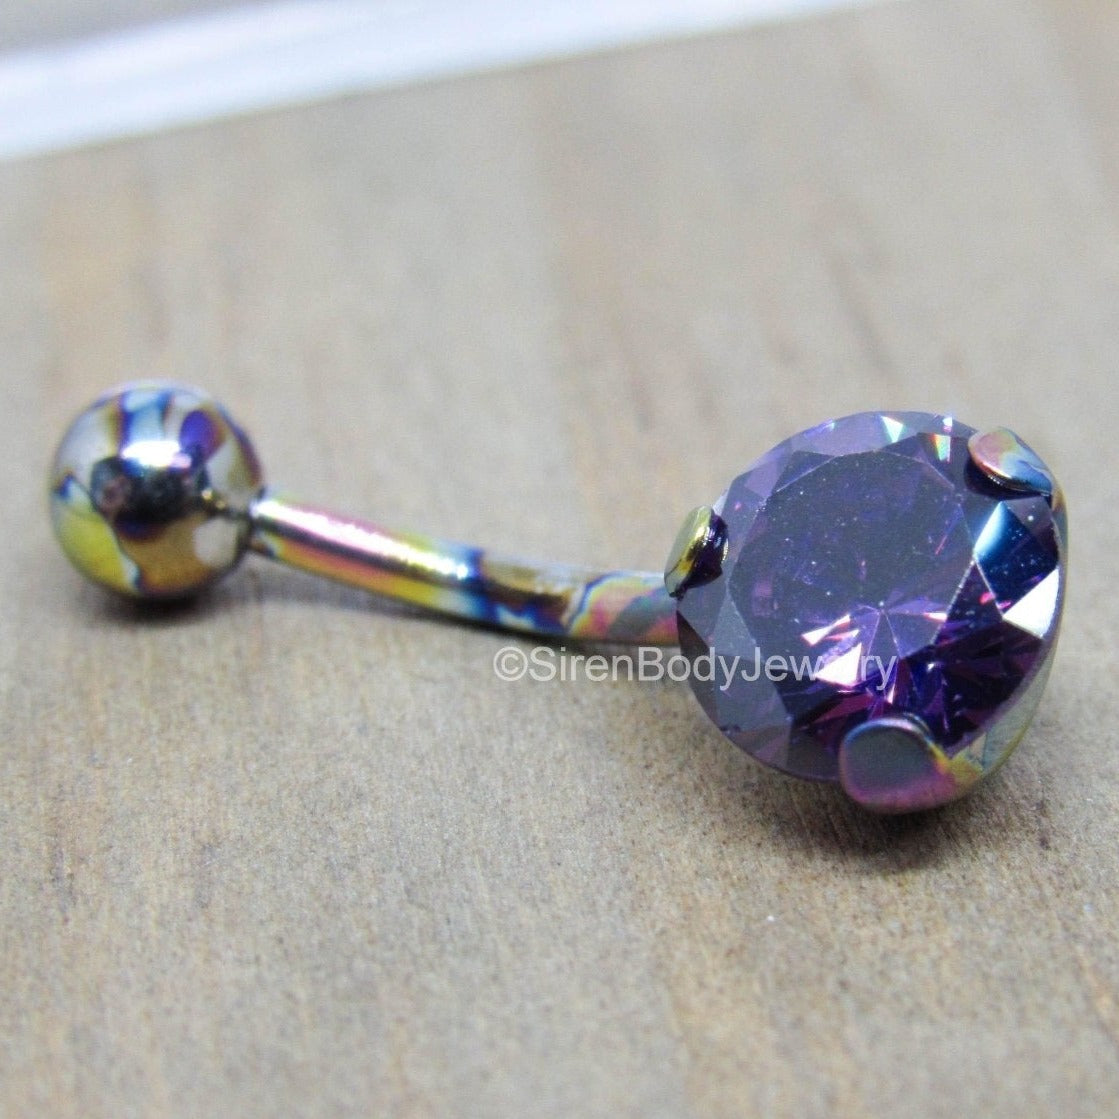 14g purple gem titanium belly button ring 7/16"